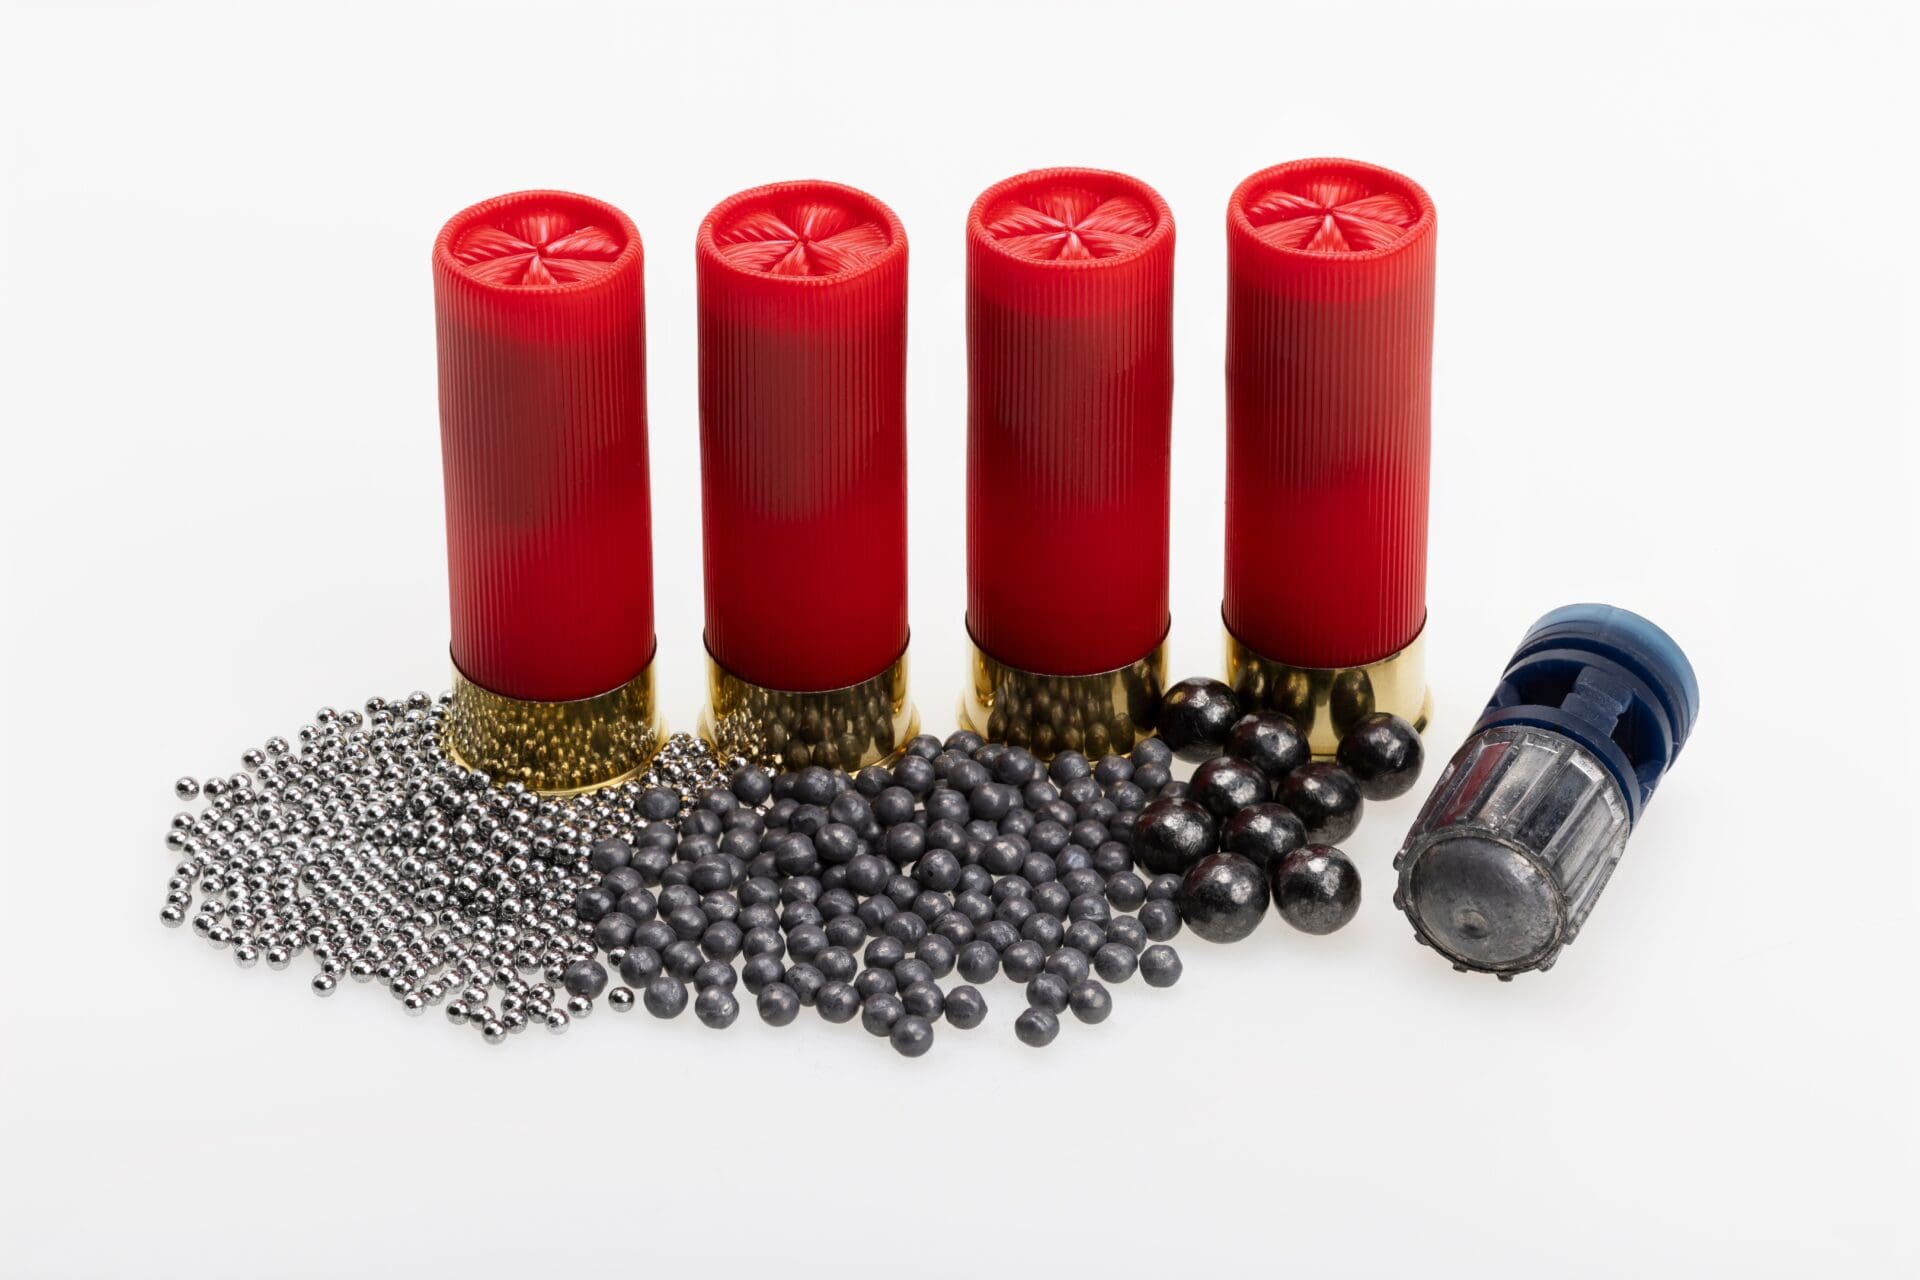 Shotgun ammunition shells lead